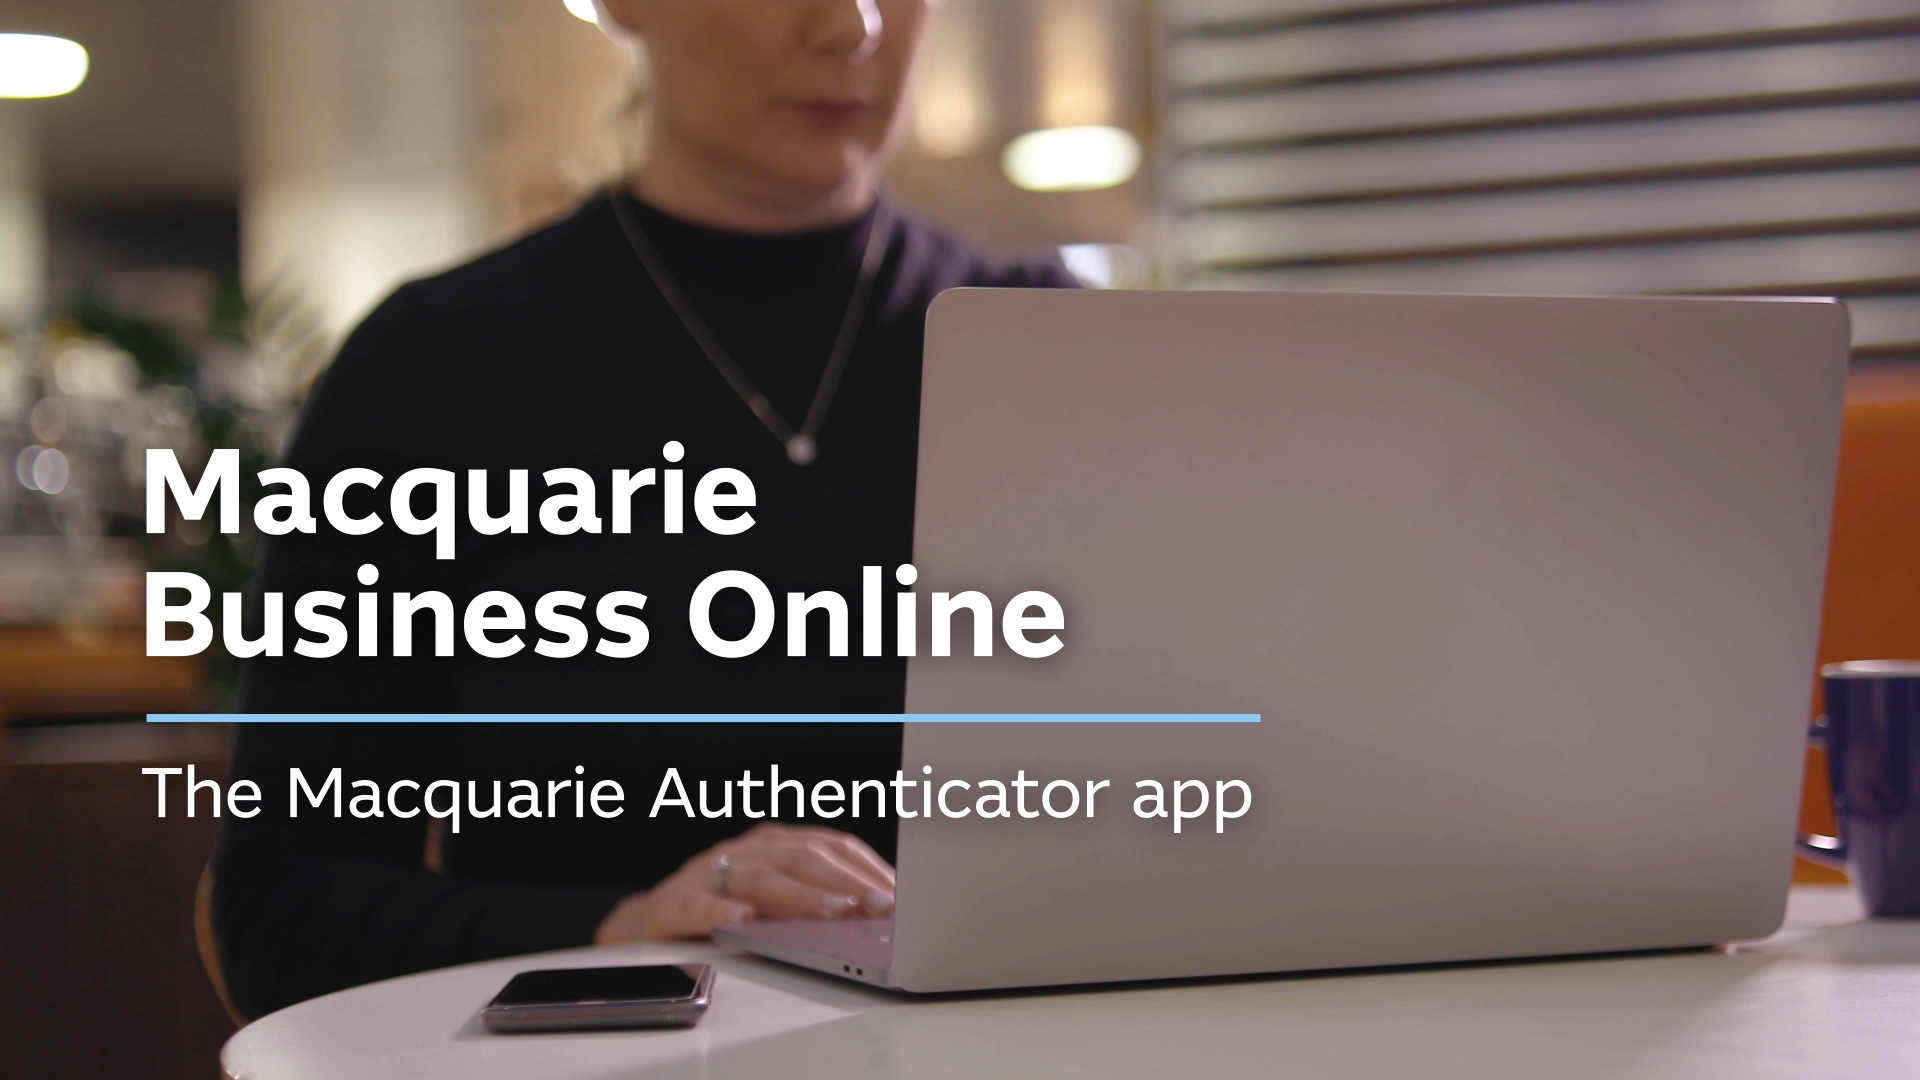 Macquarie Business Online Authenticator app video